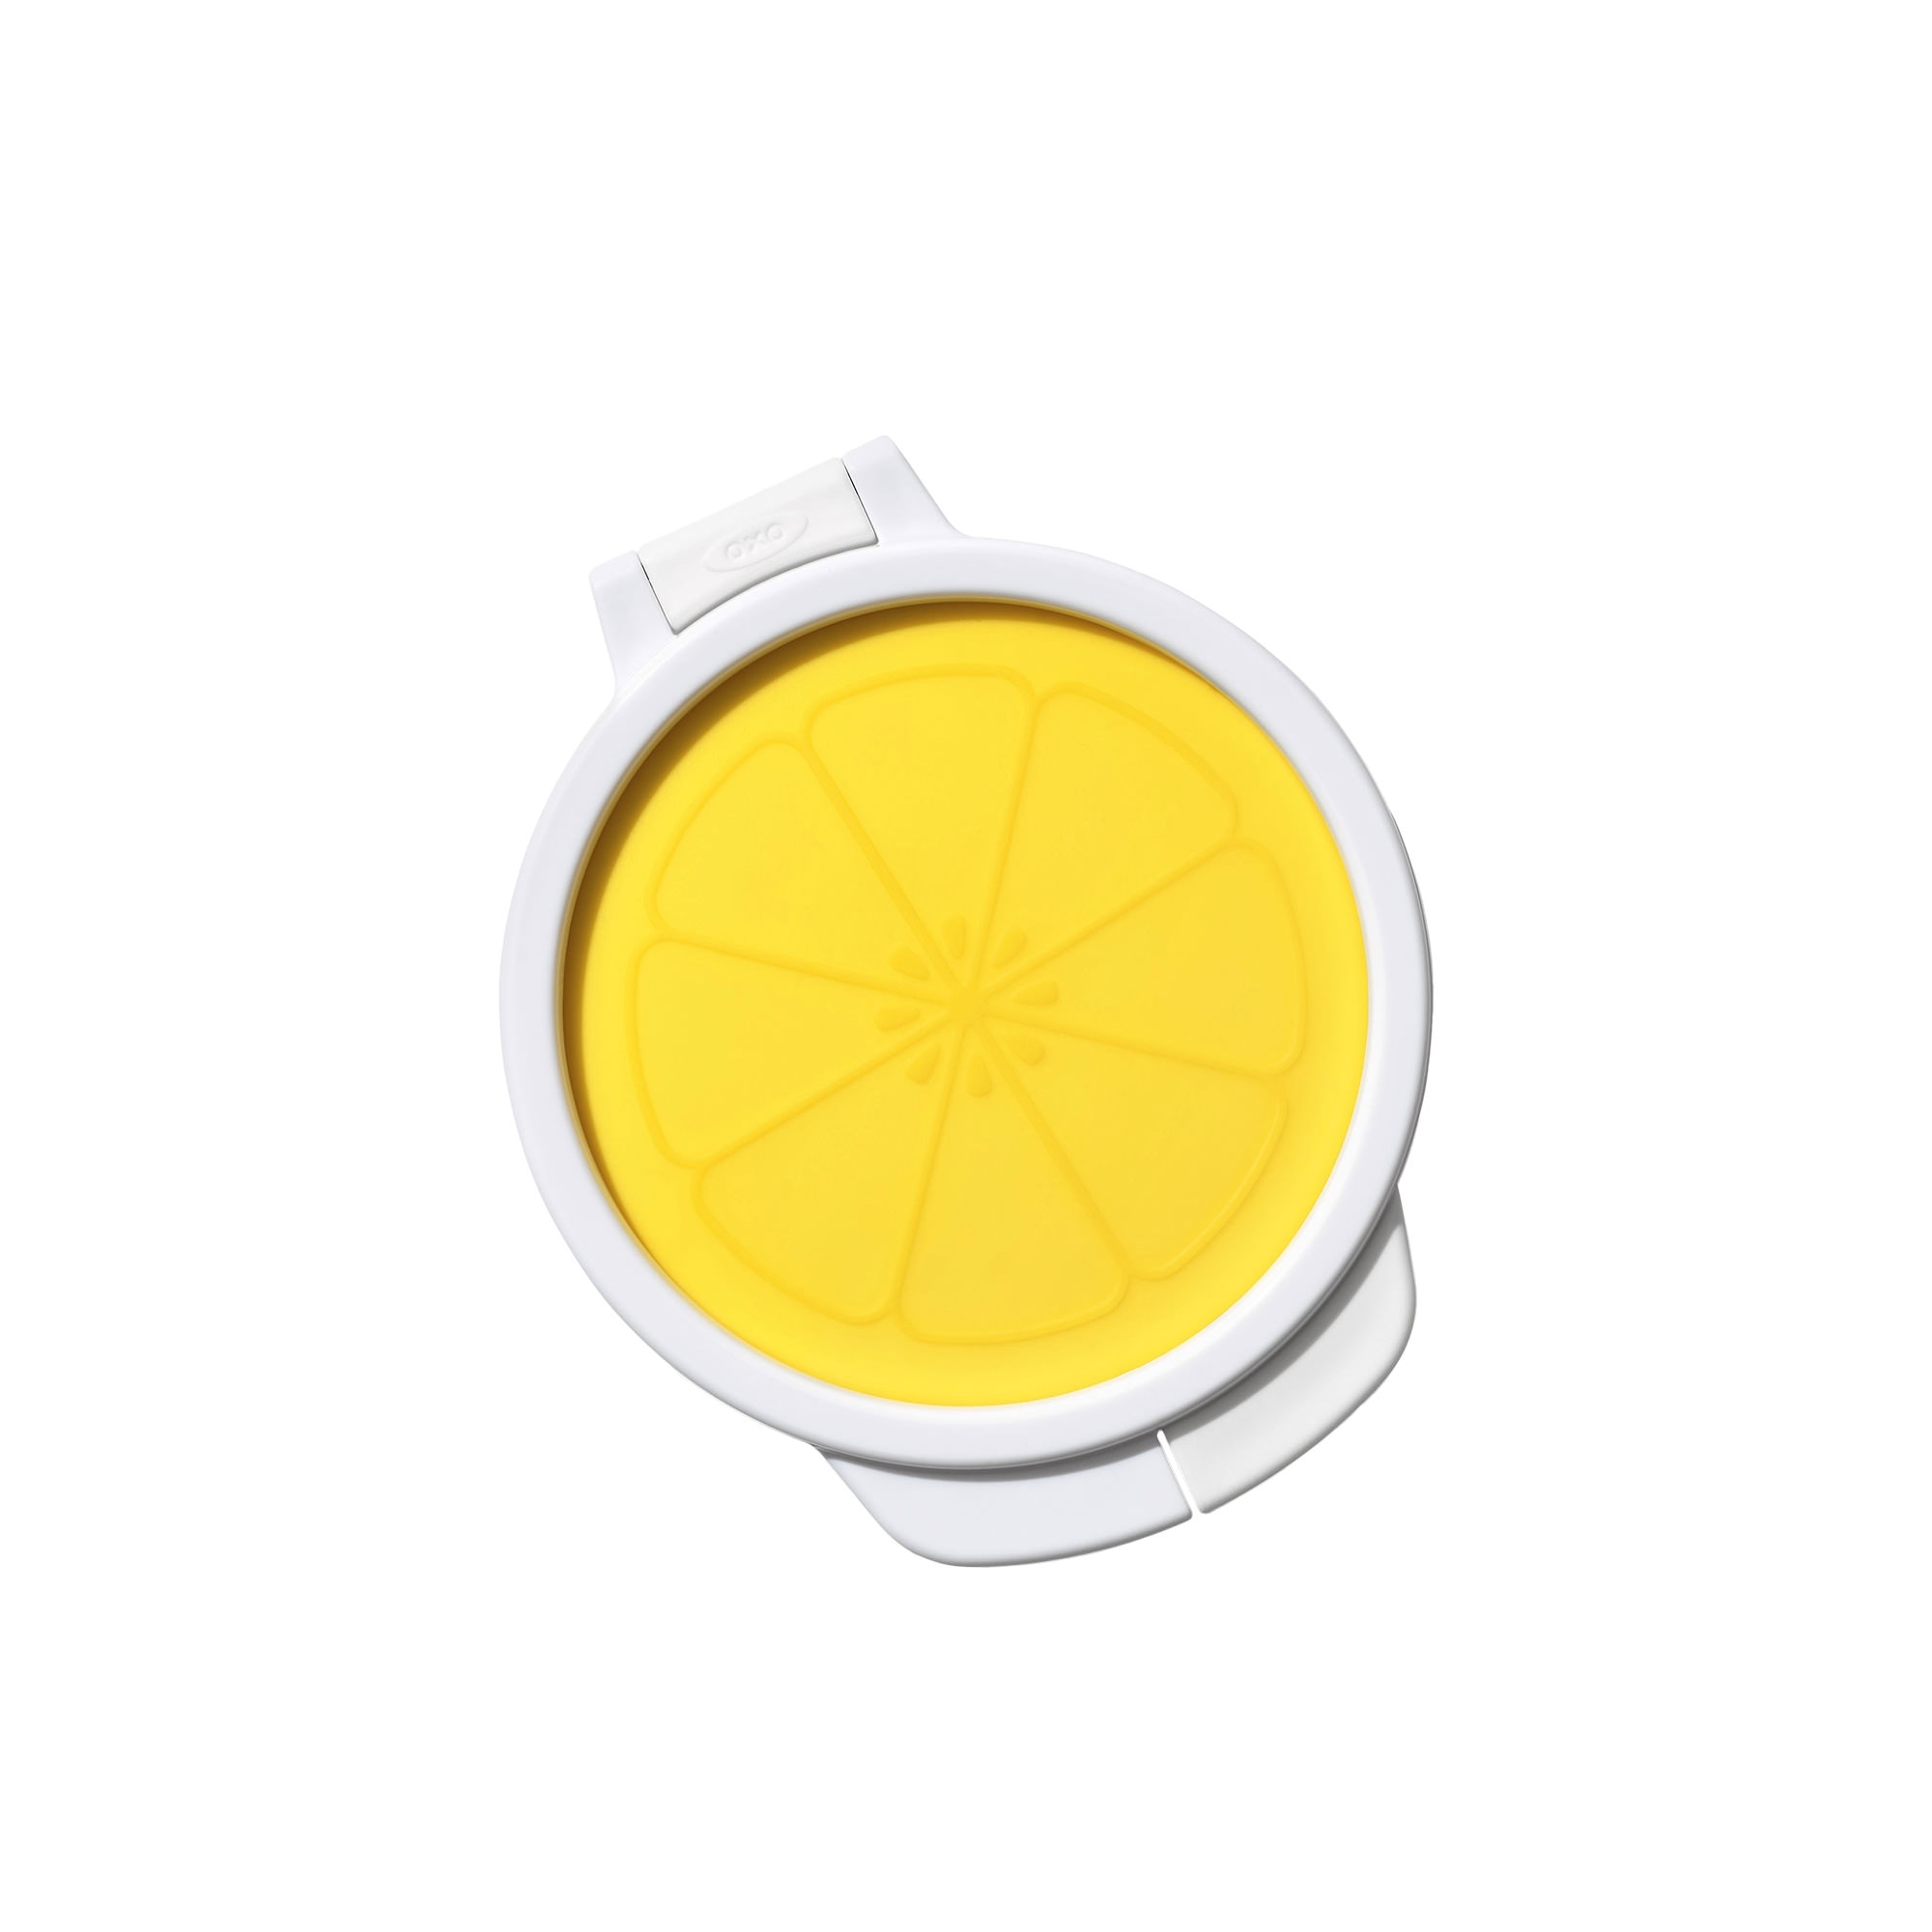 OXO Good Grips Cut & Keep Silicone Lemon Saver Yellow Image 1